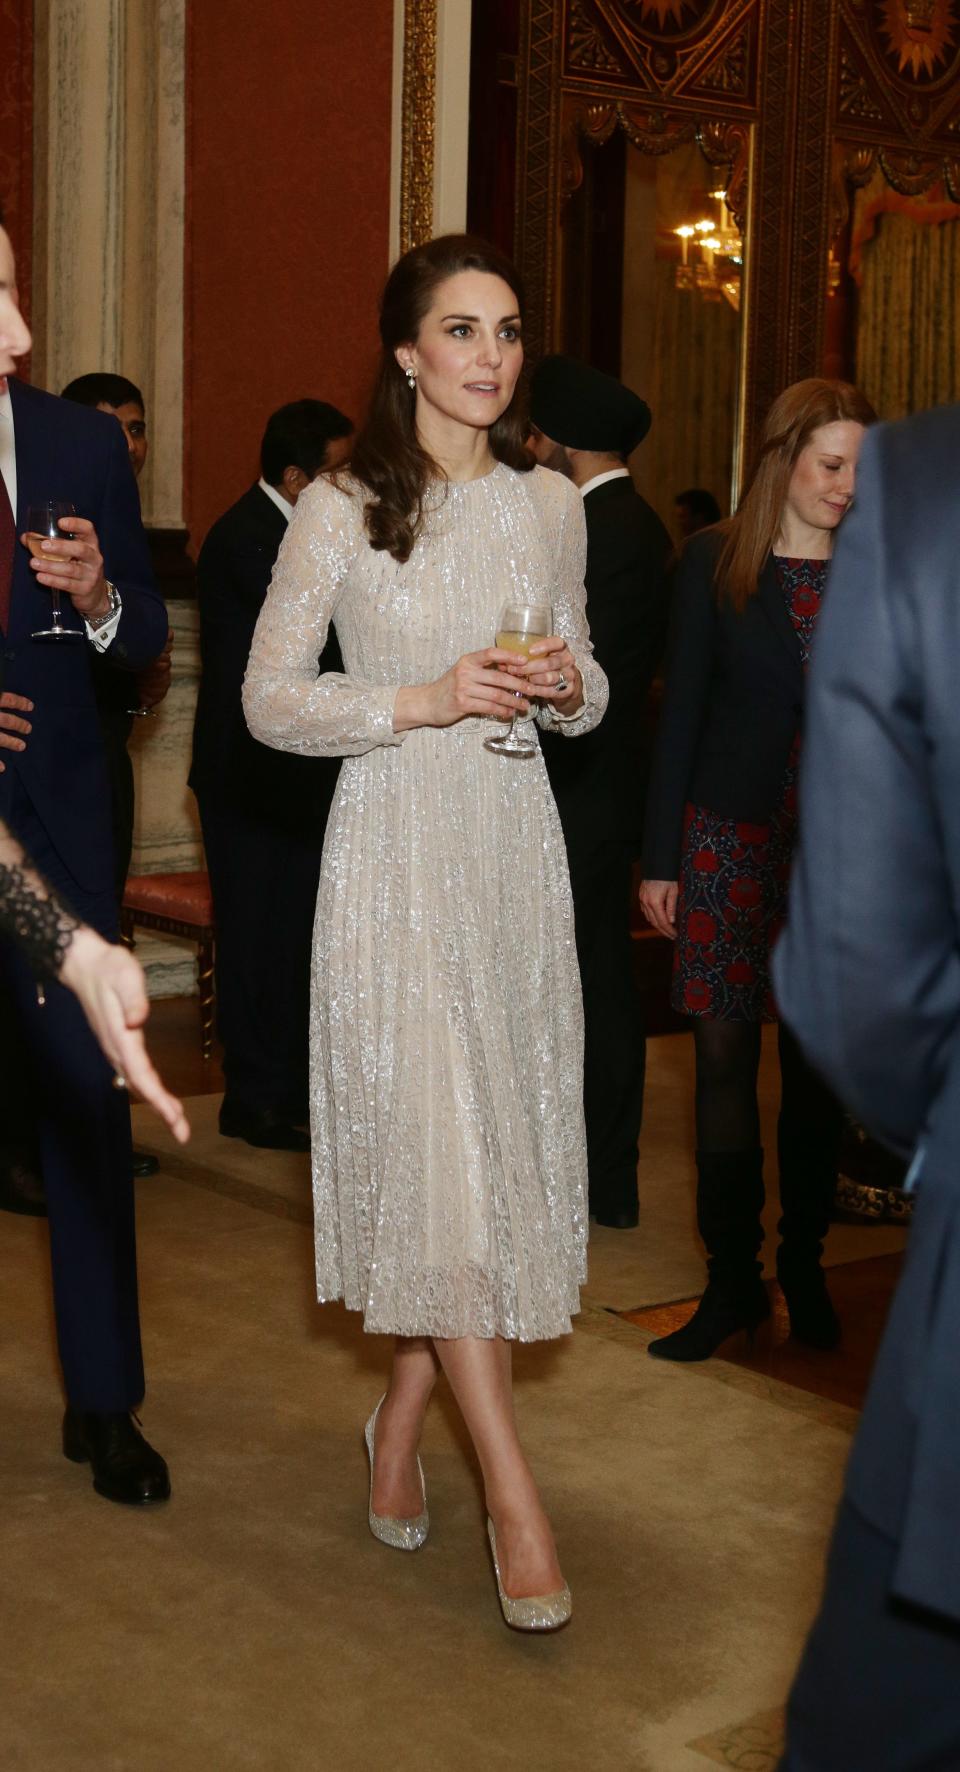 Kate Middleton wearing a white sparkly dress